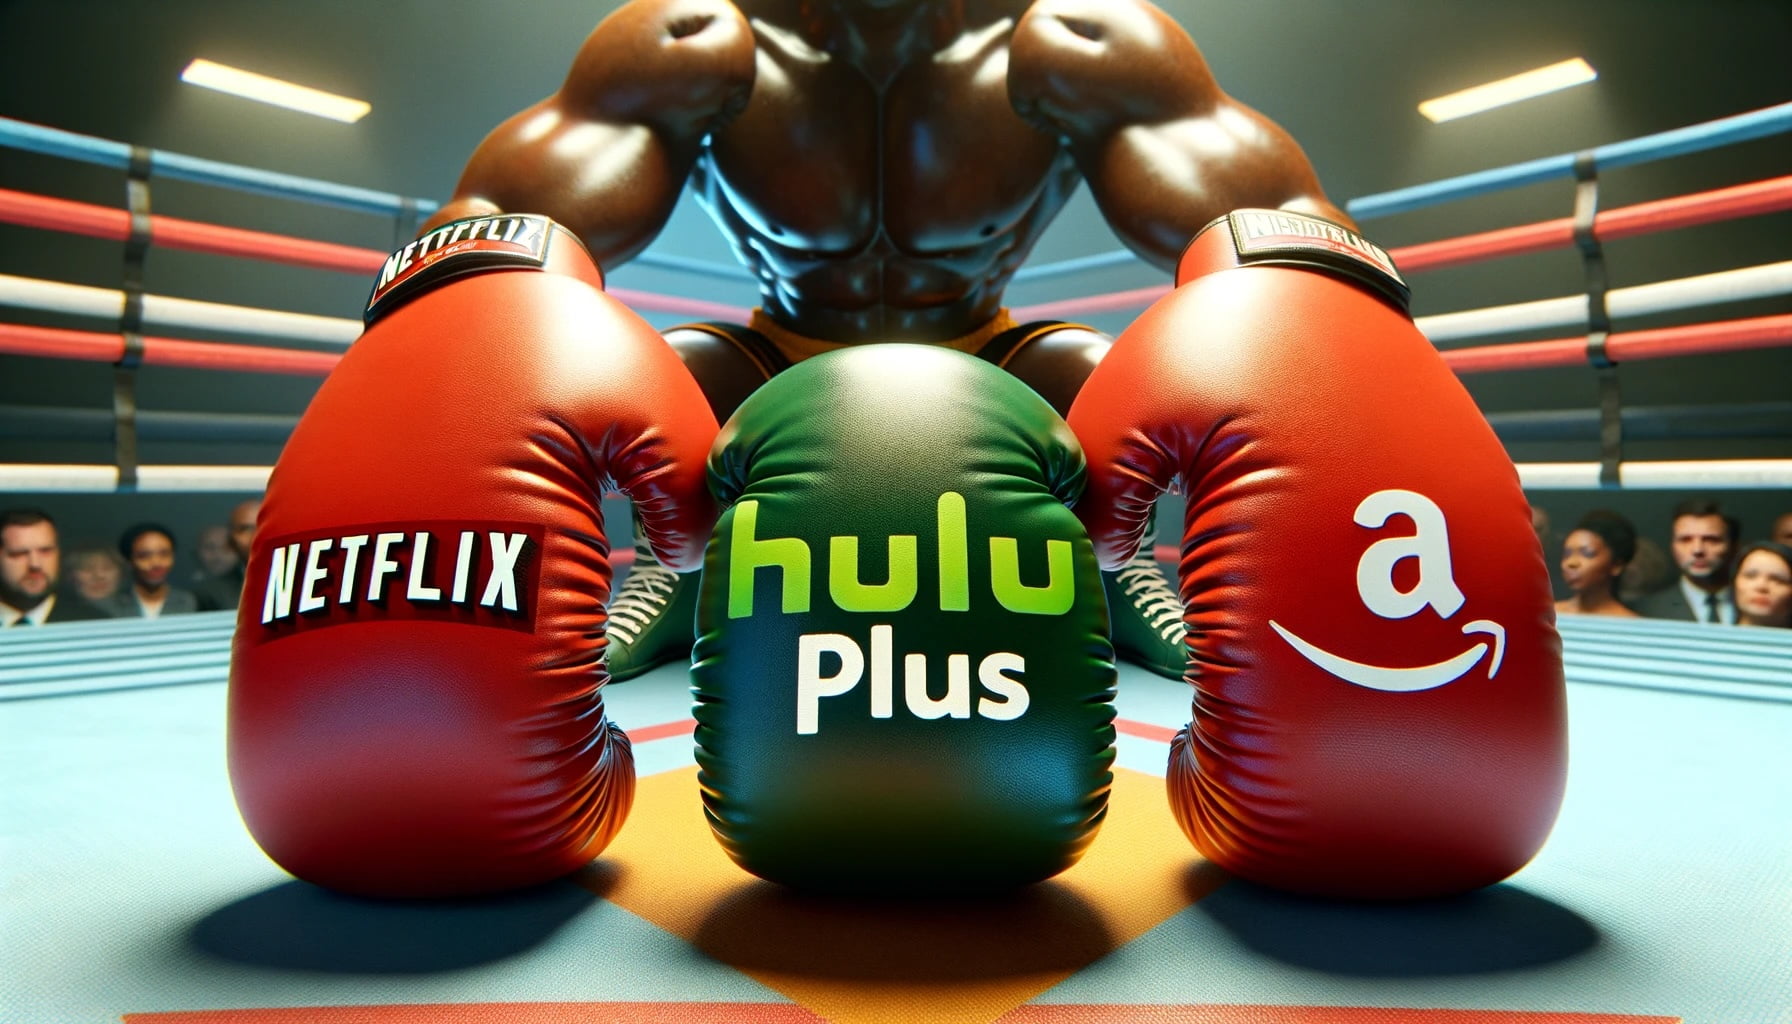 Netflix vs. Amazon Prime vs. Hulu Plus Head to Head